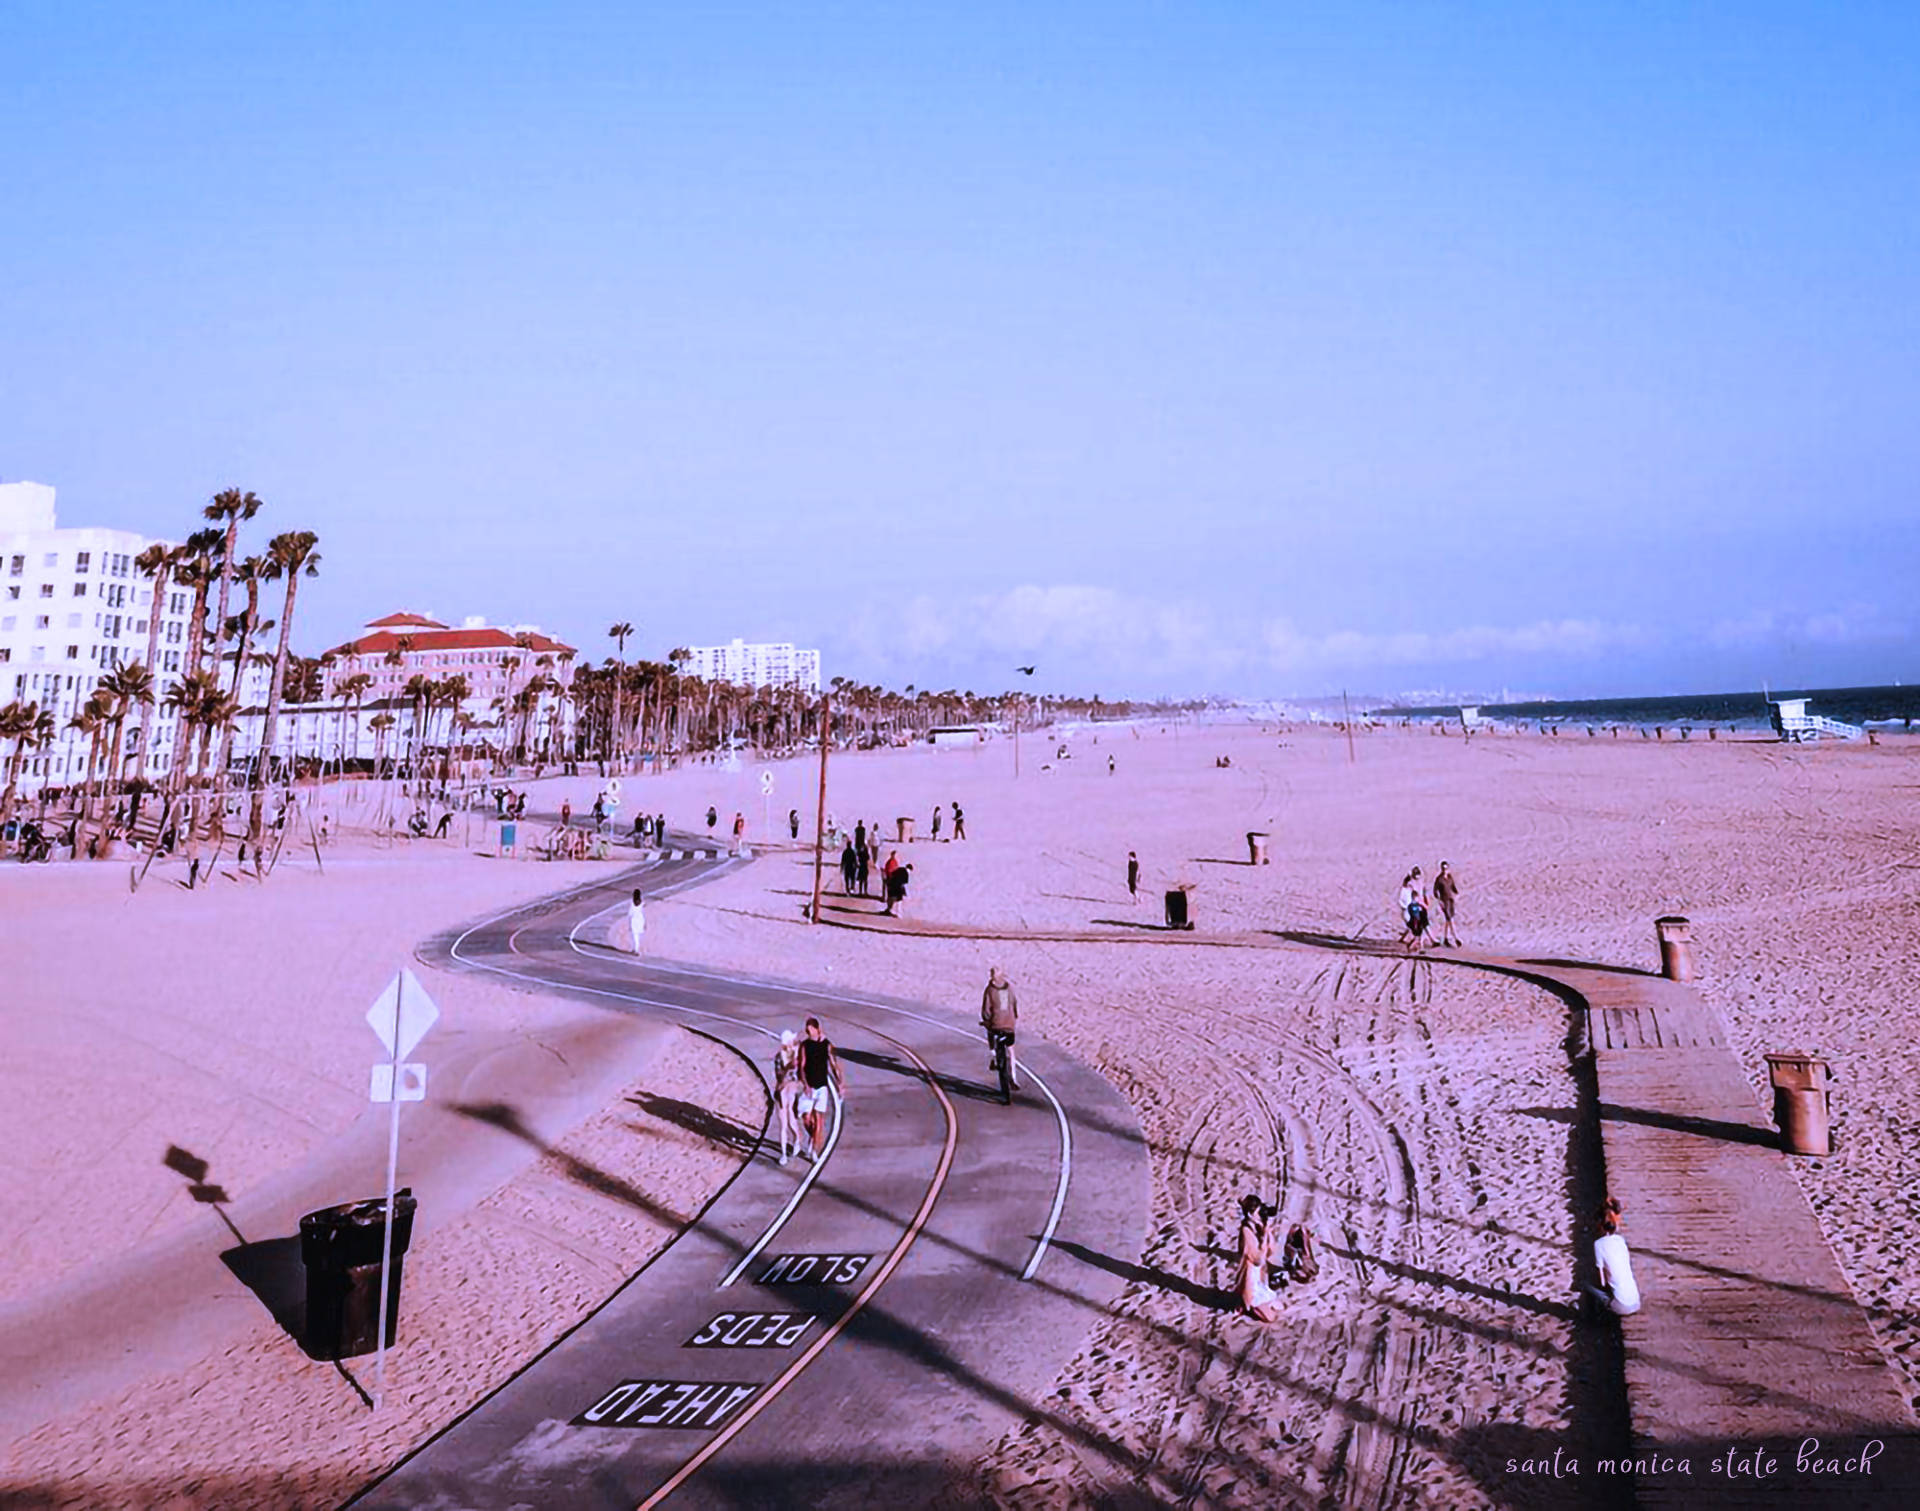 Caption: Serene View Of Santa Monica State Beach Background